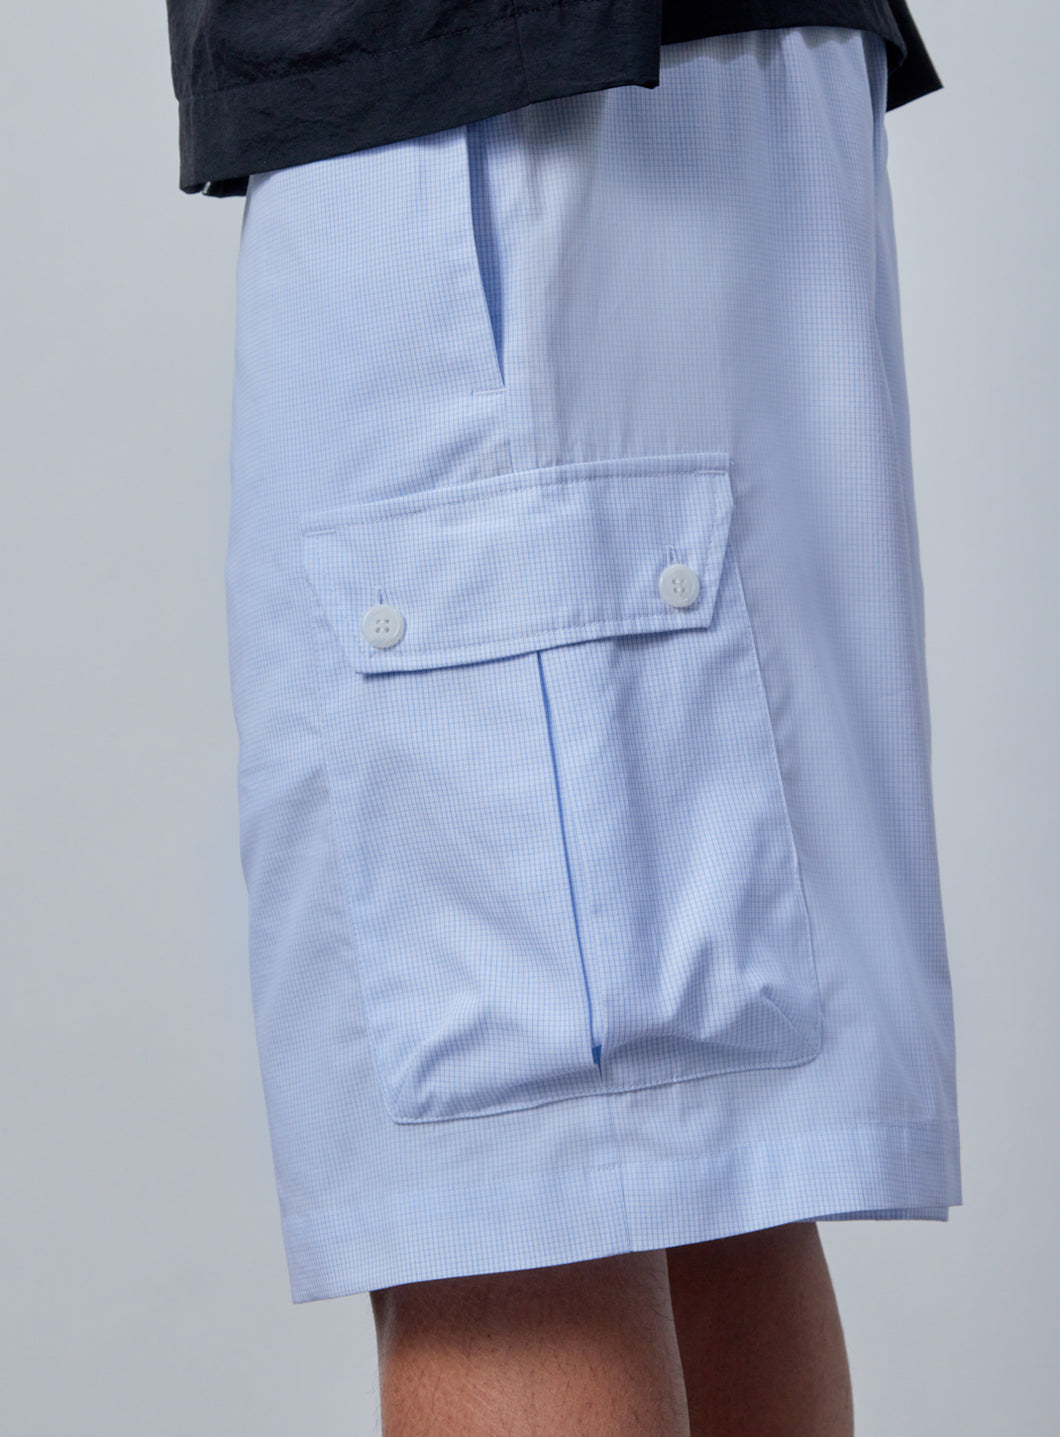 Bermuda Pants with Envelope Pockets in White Poplin with Sky Blue Mini Checks